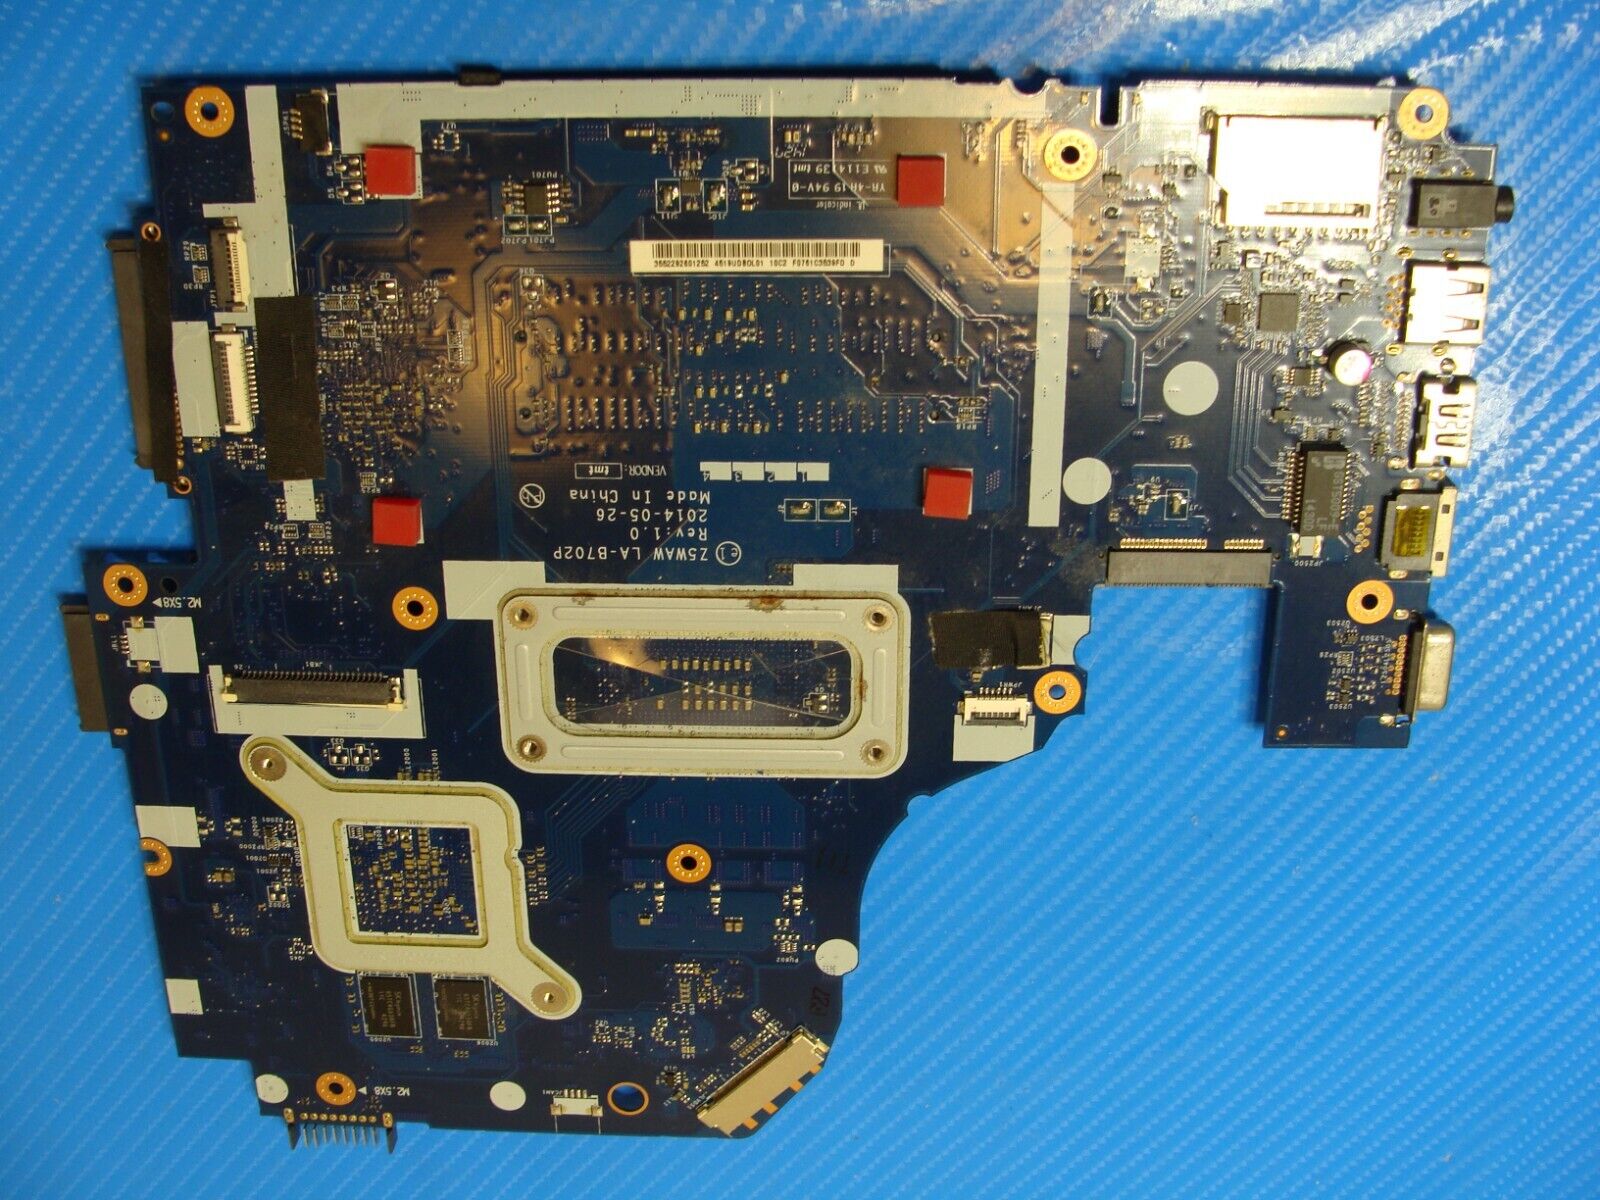 Acer Aspire 15.6” E5 572G-31CL Intel i3-4000M 2.4GHz 4GB Motherboard LA-B702P